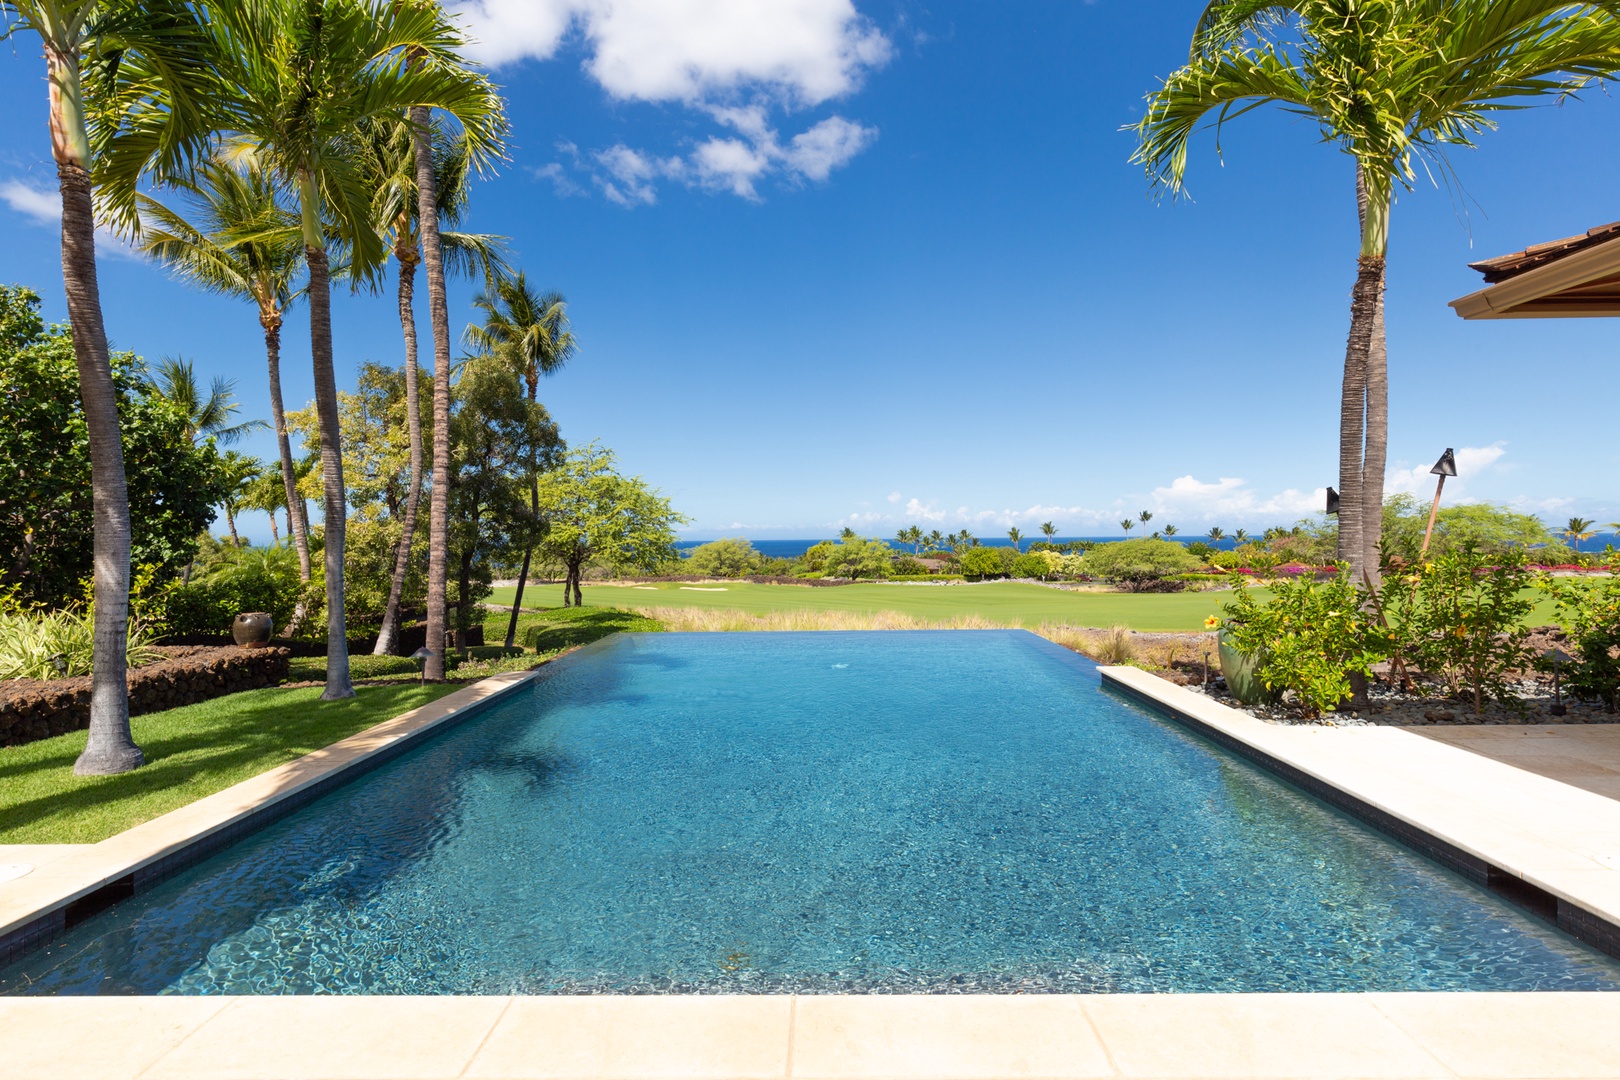 Kailua Kona Vacation Rentals, 4BD Hainoa Estate (102) at Four Seasons Resort at Hualalai - Take a dip in the shimmering water beneath the immense blue sky